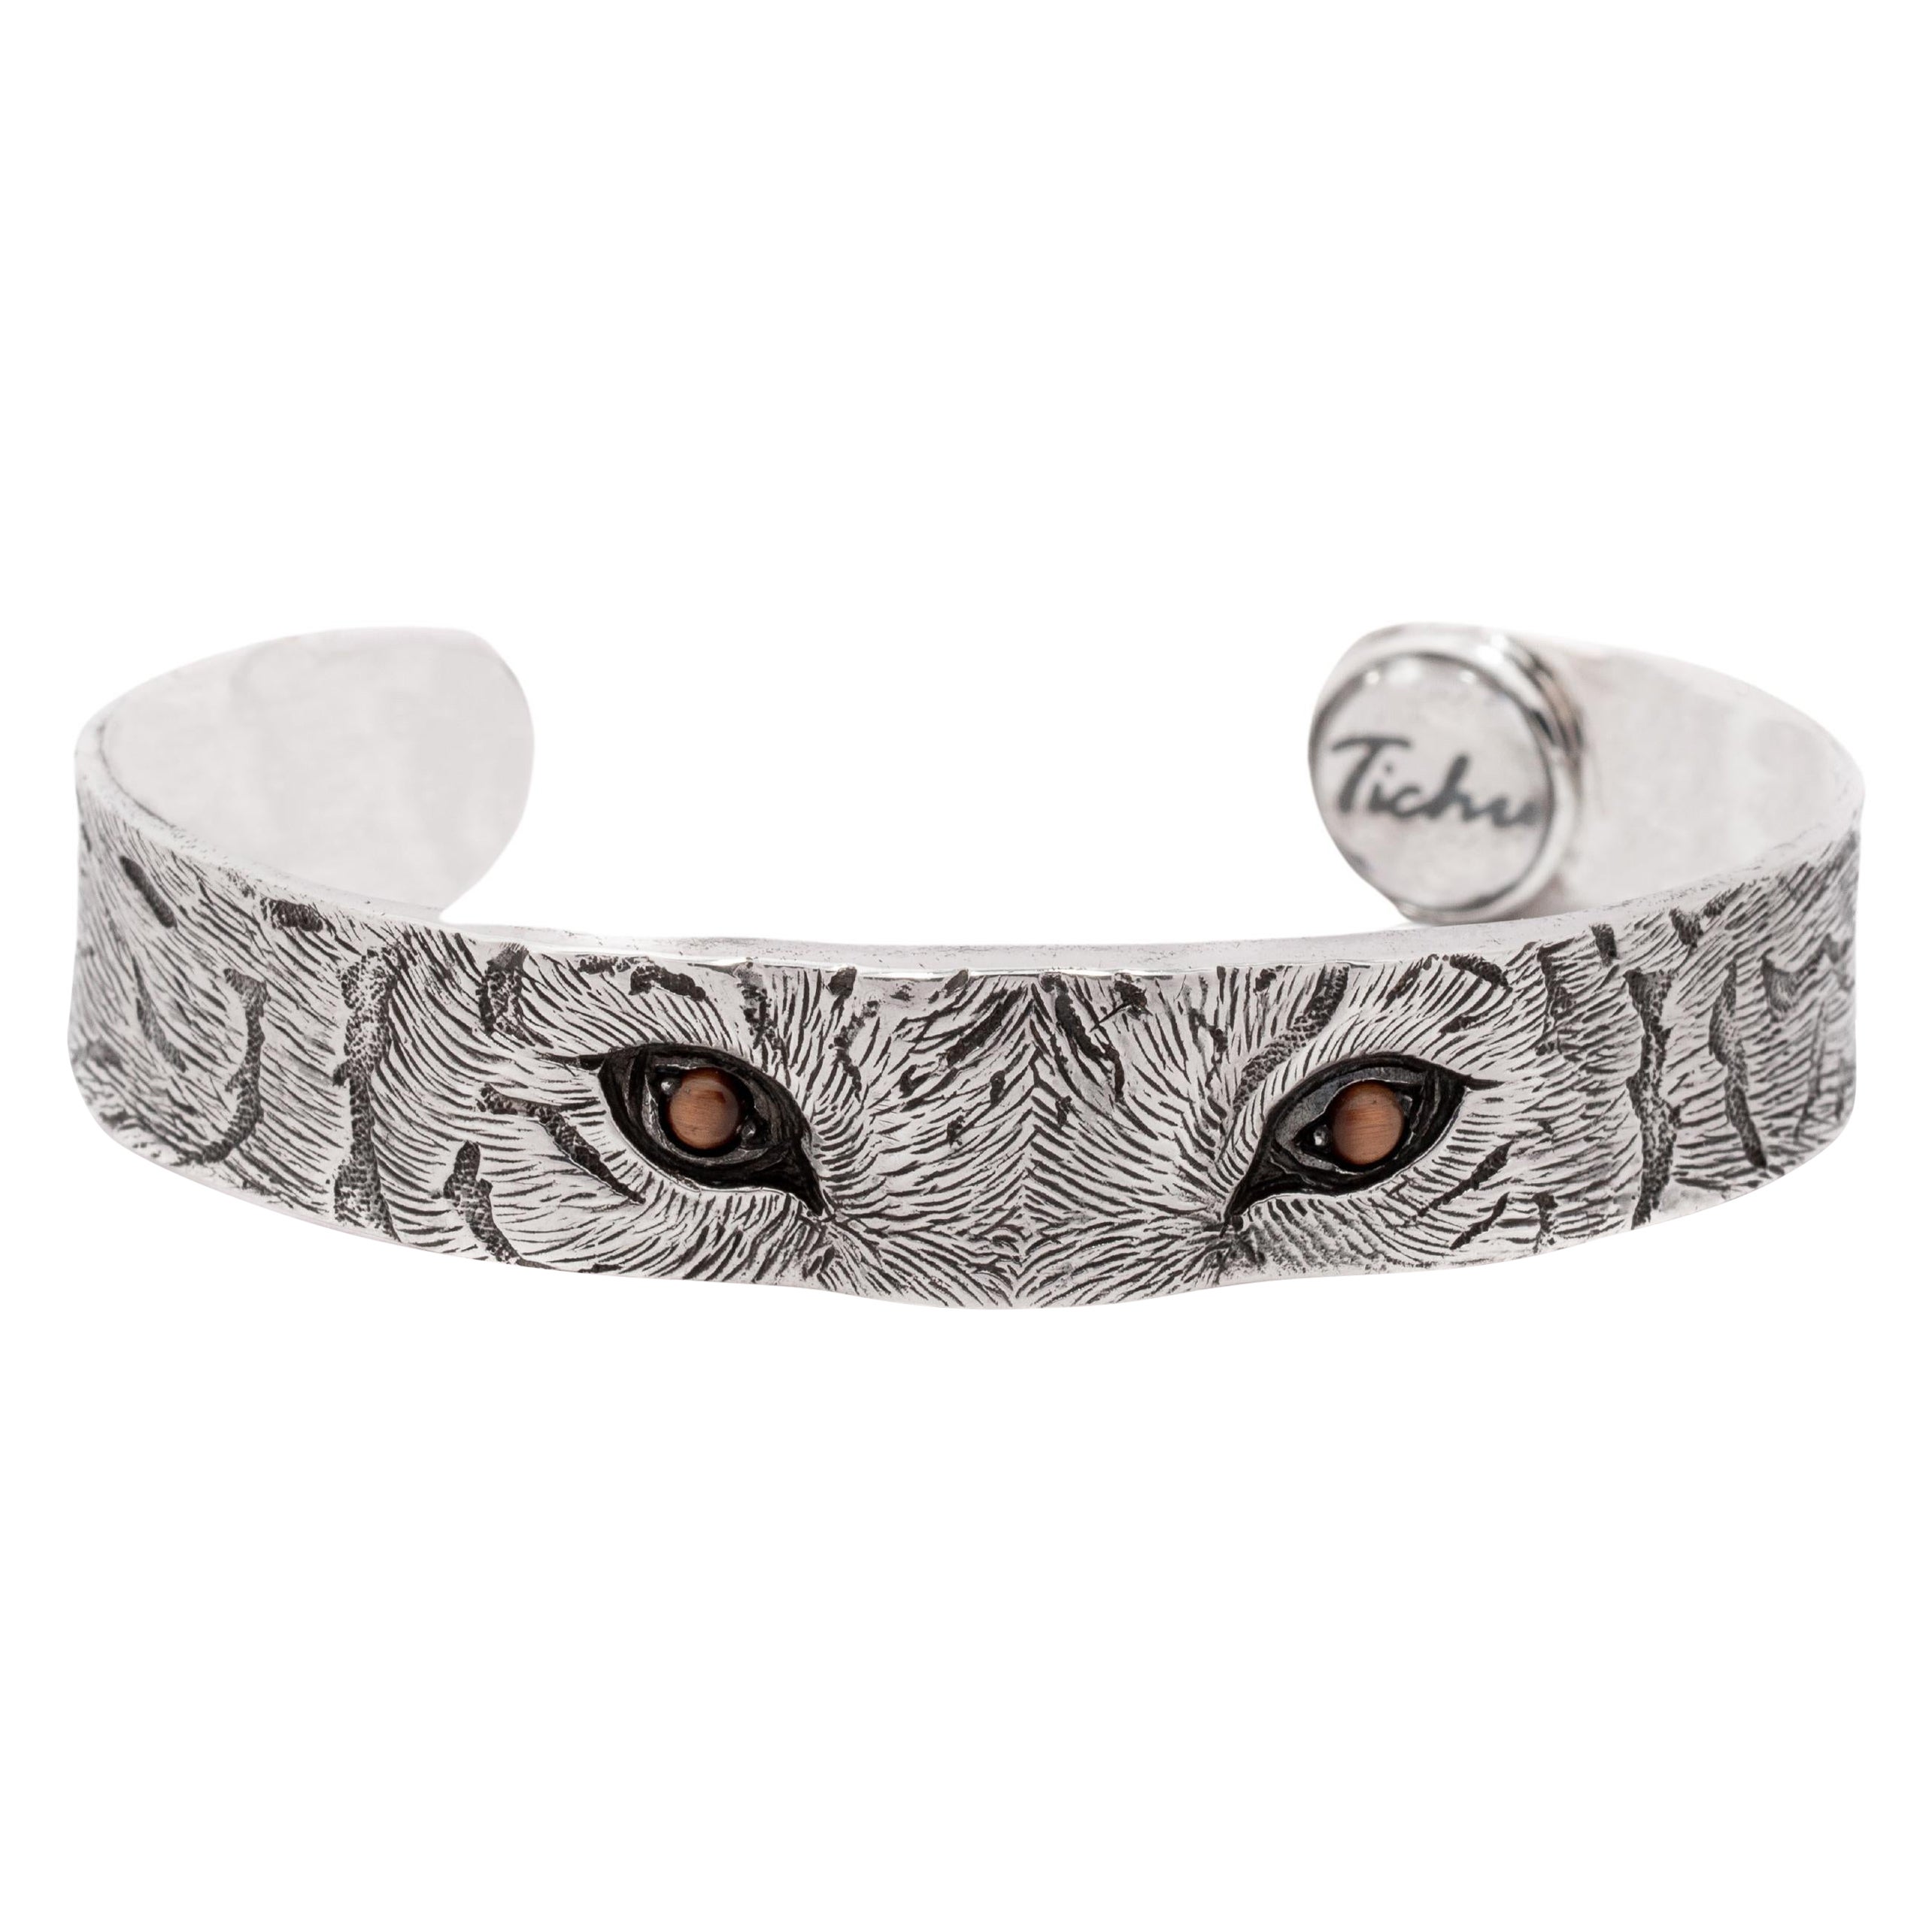 Tichu Tiger's eye Tiger Eye Cuff in Sterling Silver and Crystal Quartz Size S